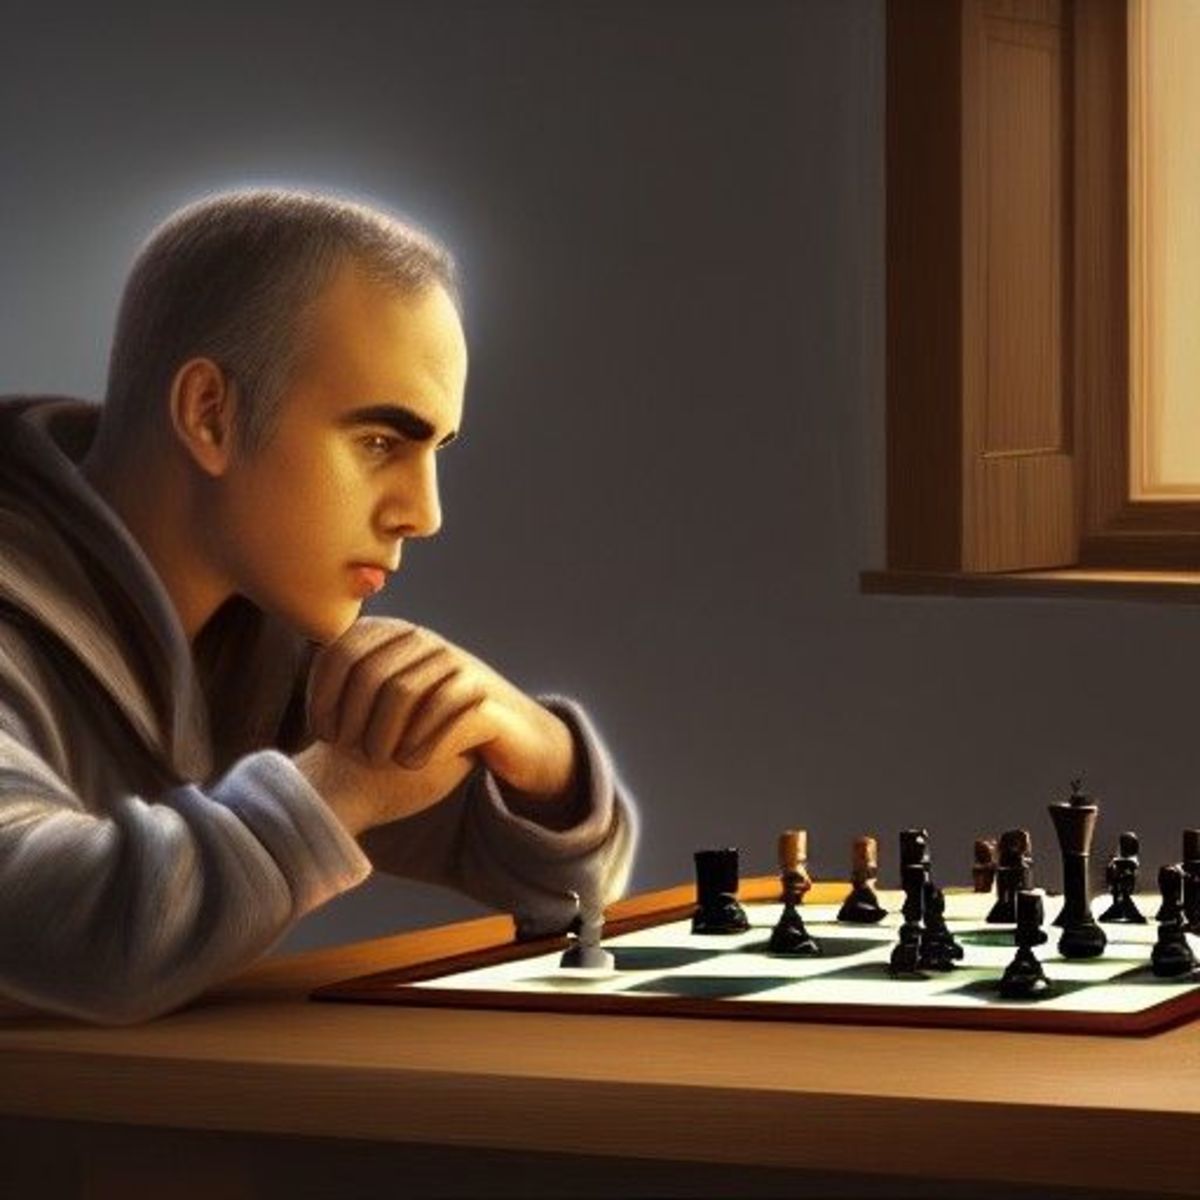 Artist's interpretation of Garry Kasparov playing chess